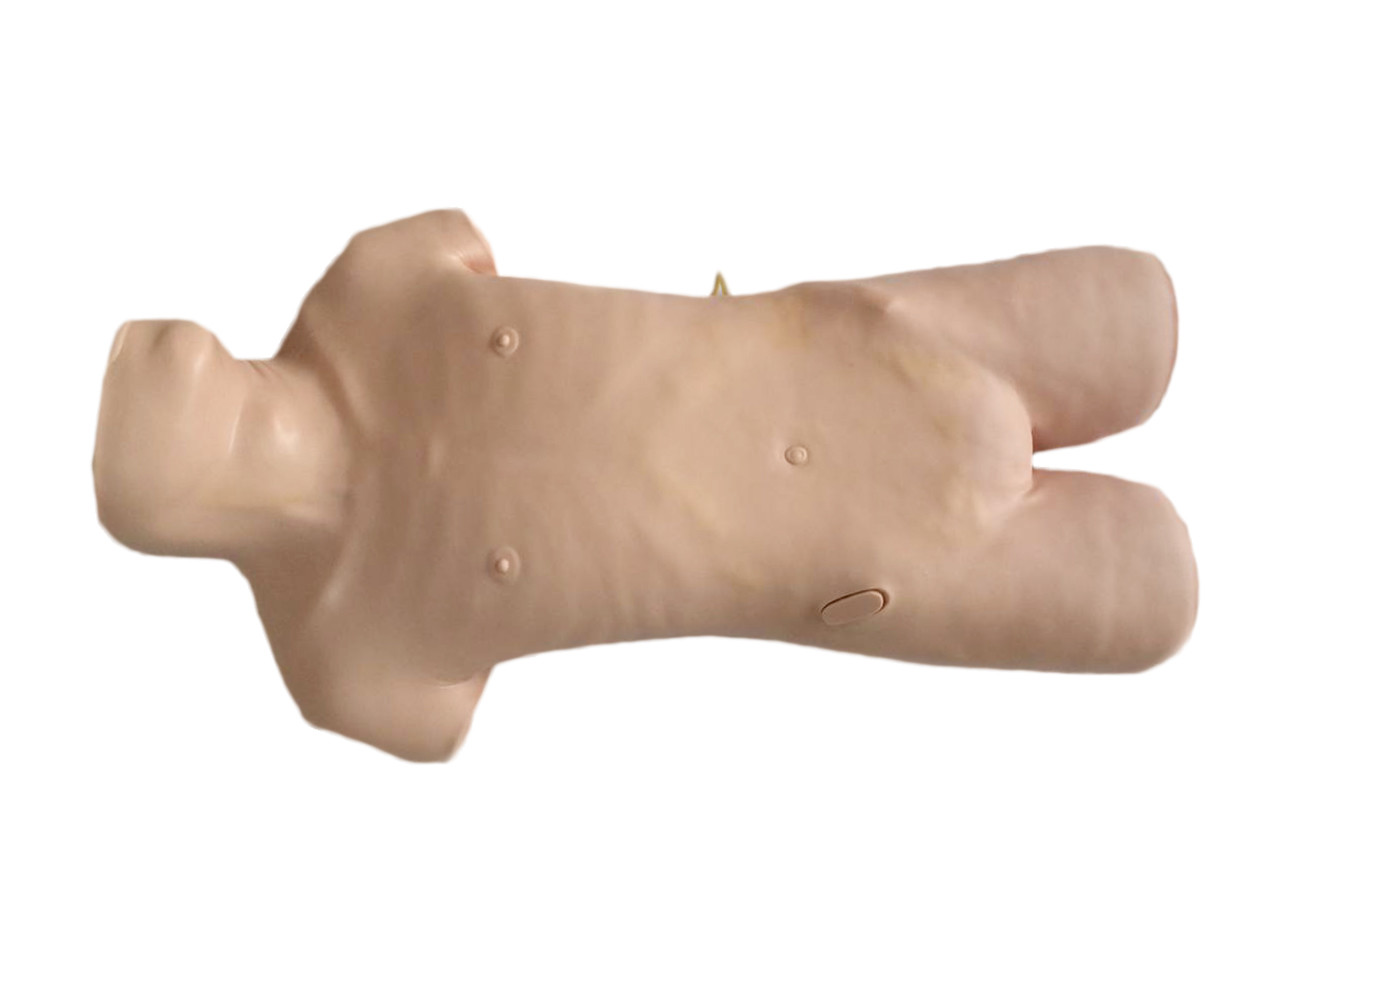 Realistic Upper Body Clinical Simulation Abdominocentesis Manikin untuk Praktik Tusuk